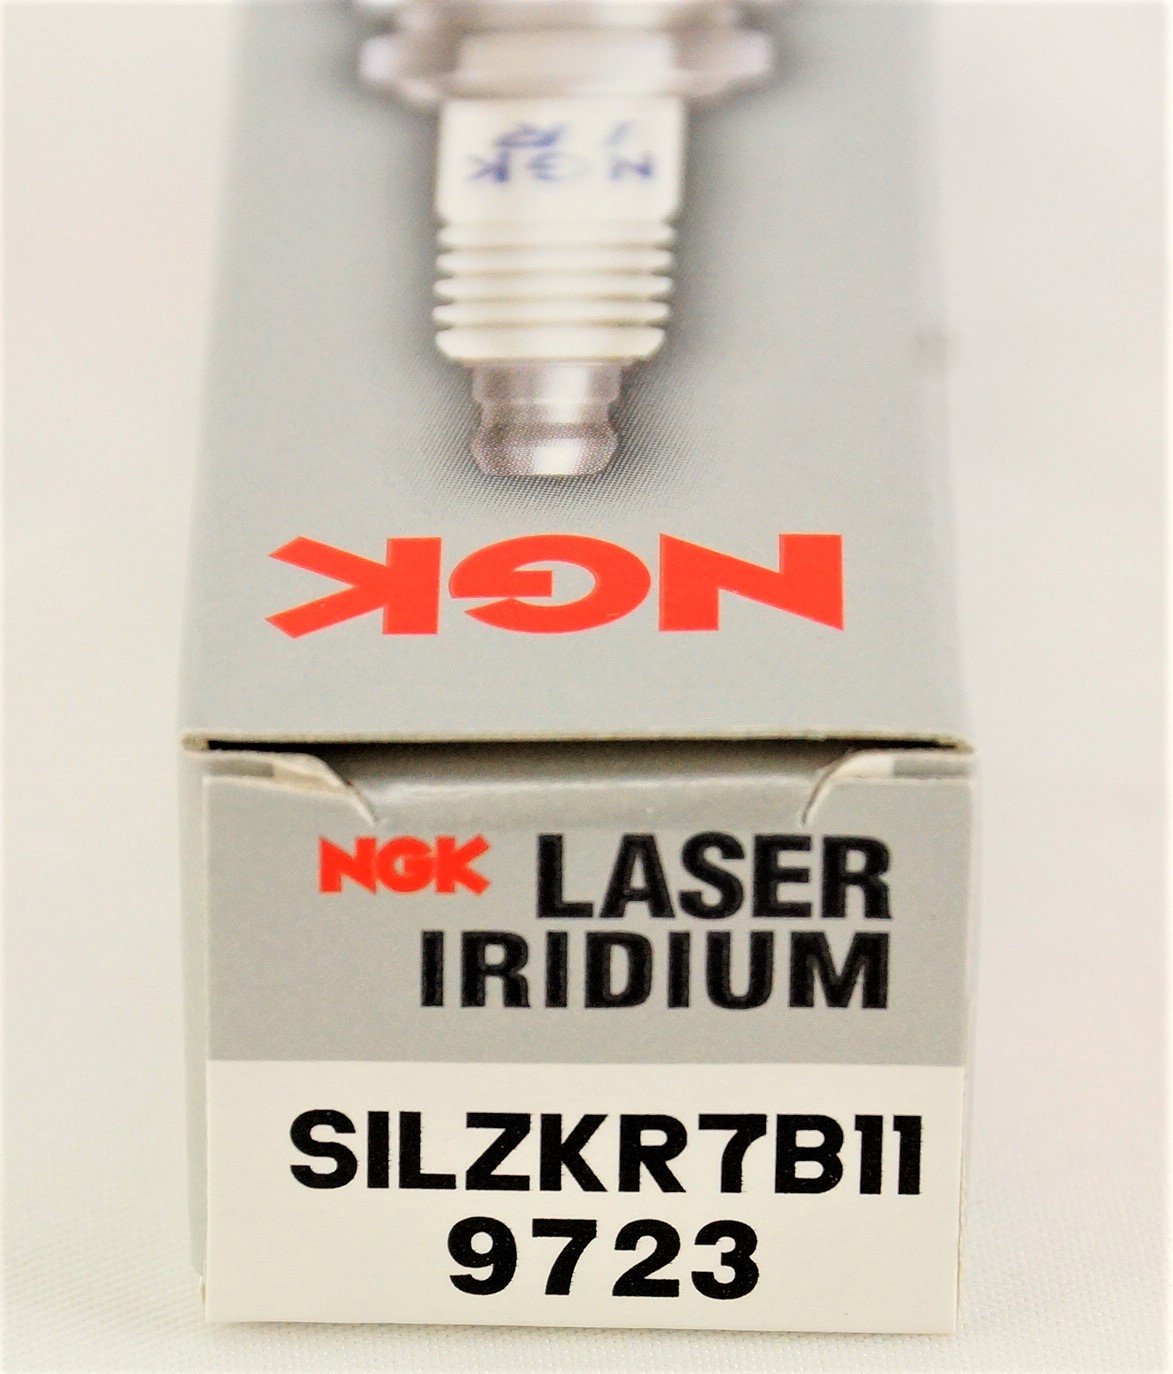 Set of 6 Genuine NGK 9723 Spark Plugs - Laser Iridium SILZKR7B11 Free Shipping - image 2